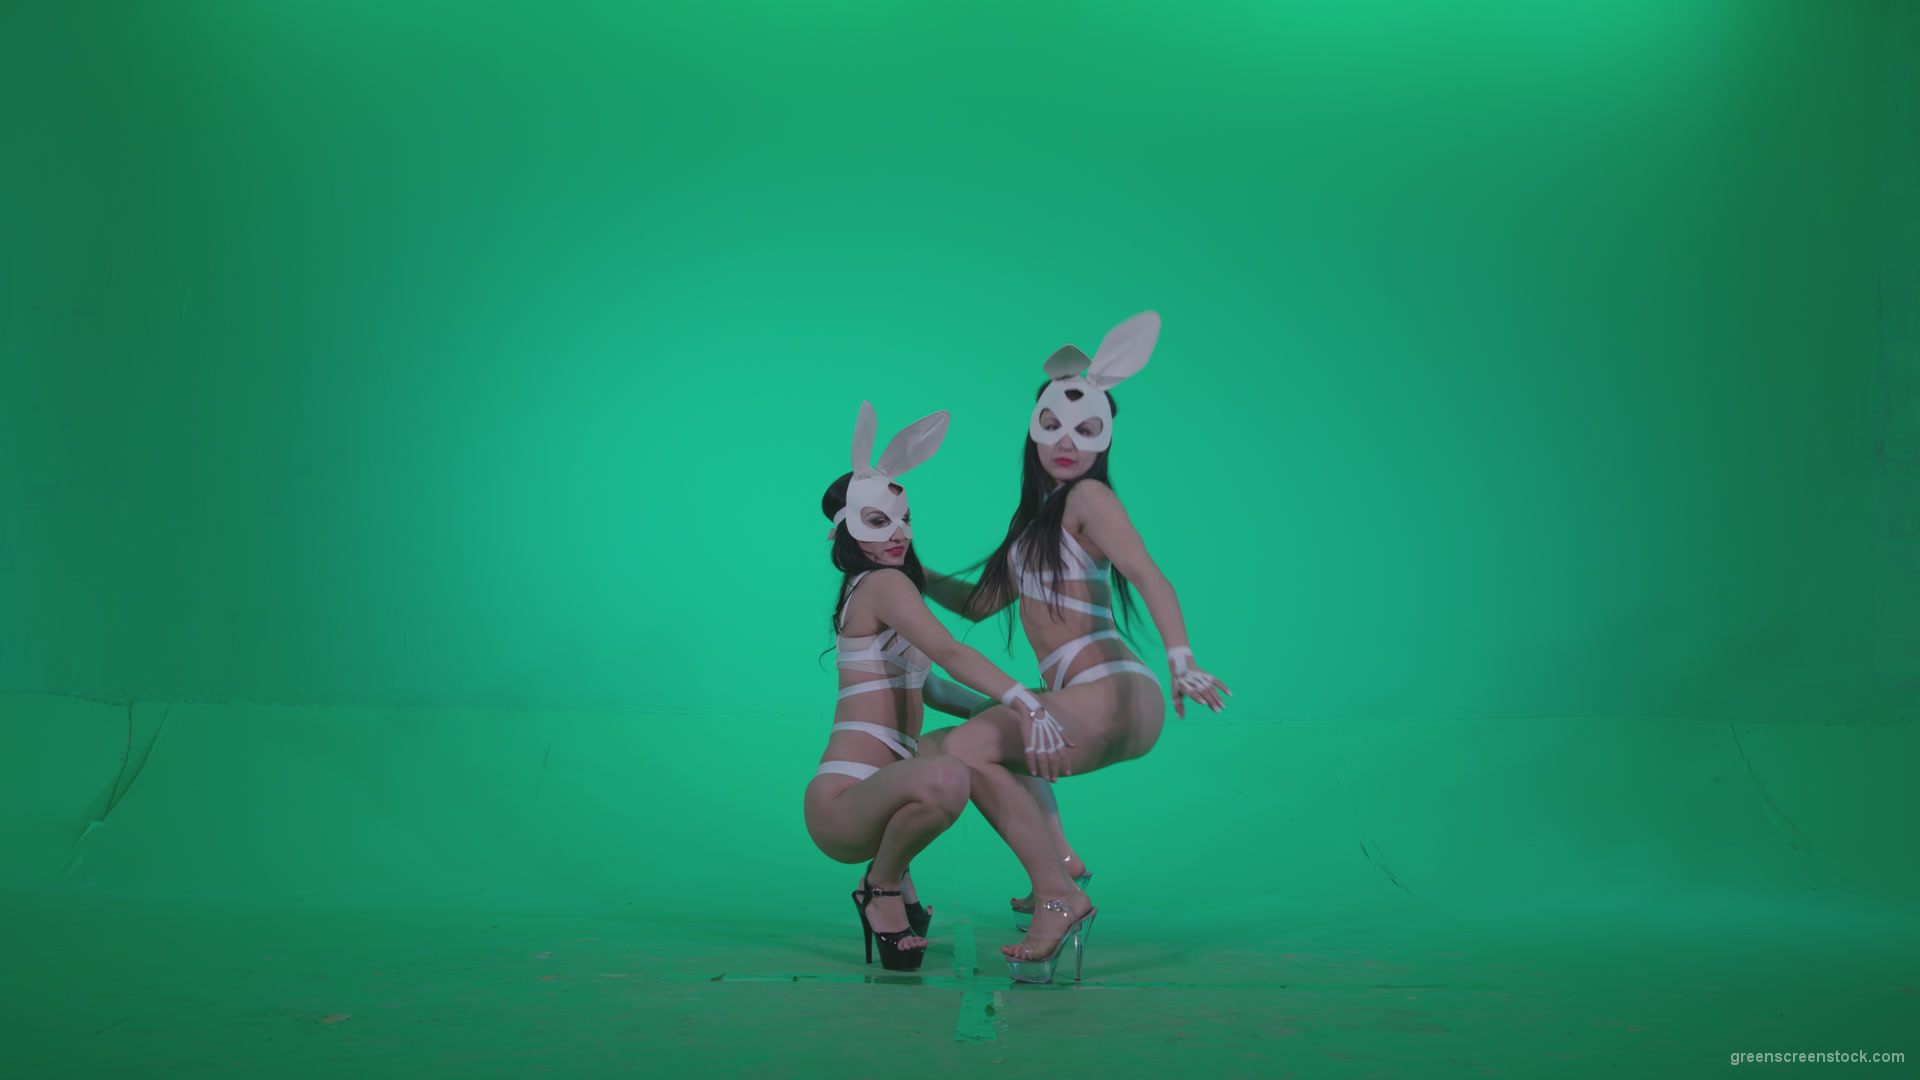 Go-go-Dancer-White-Rabbit-m4-Green-Screen-Video-Footage_004 Green Screen Stock